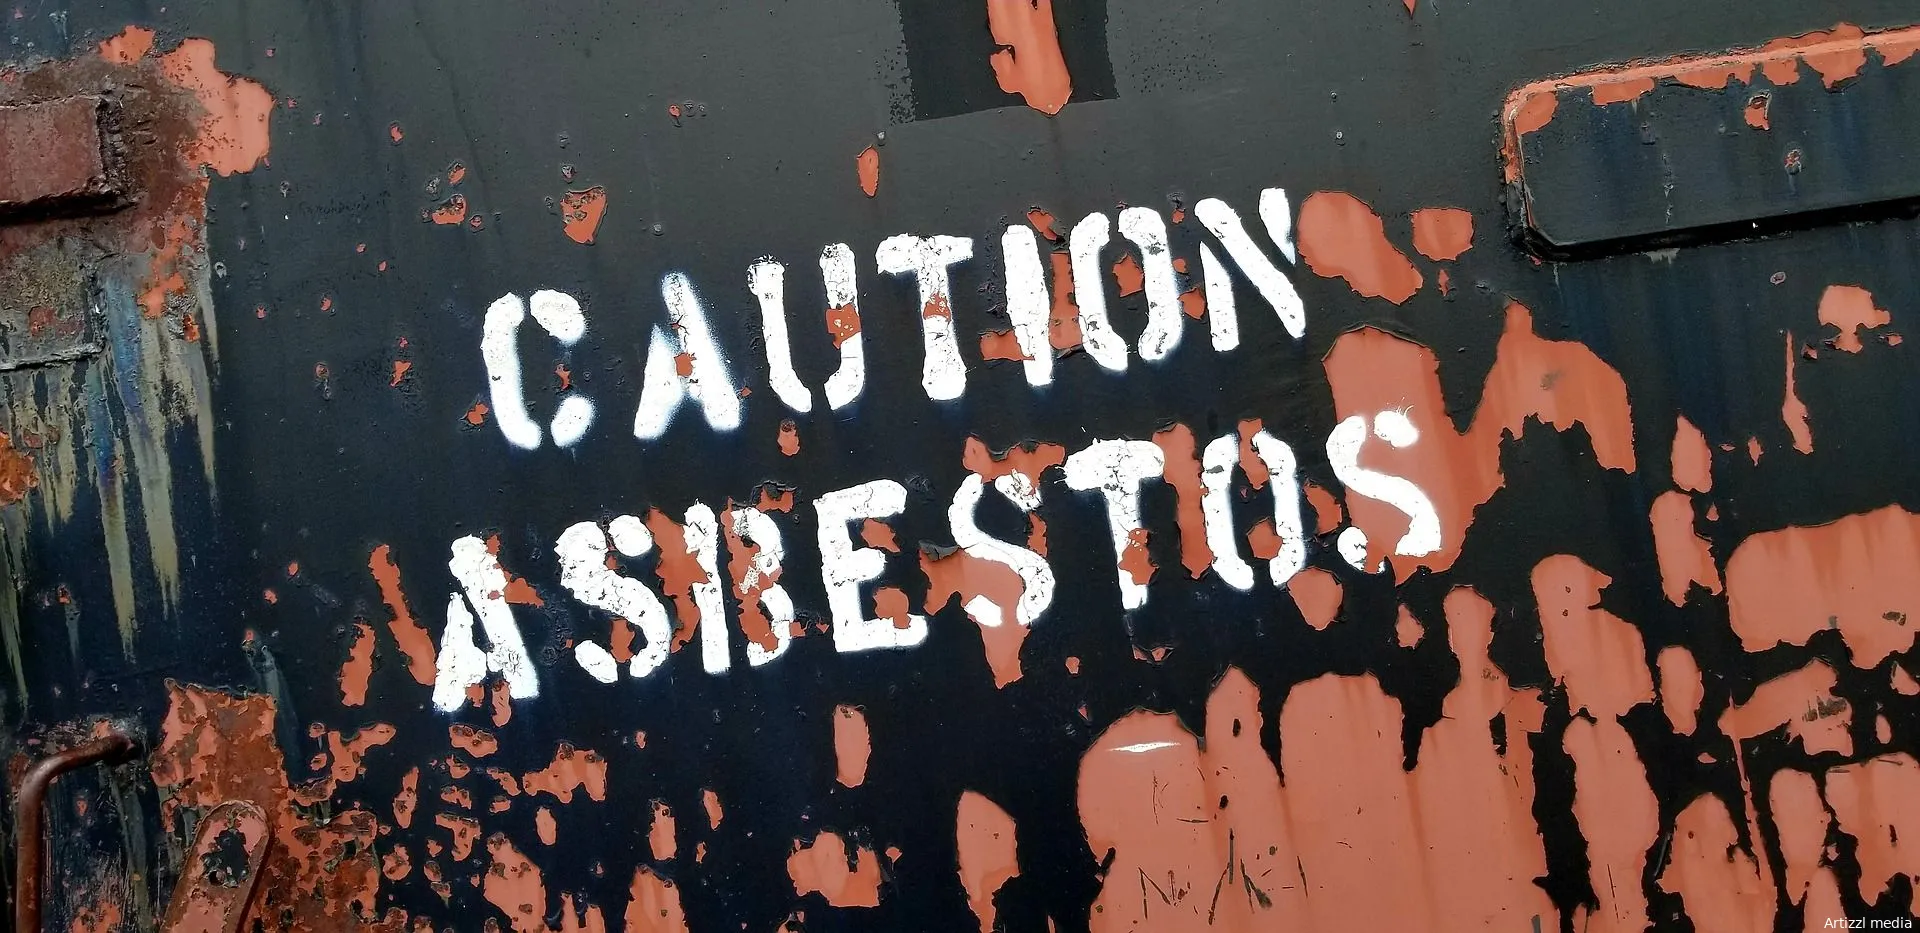 asbest sign 3789310 1920 jennifer beebe pixabay